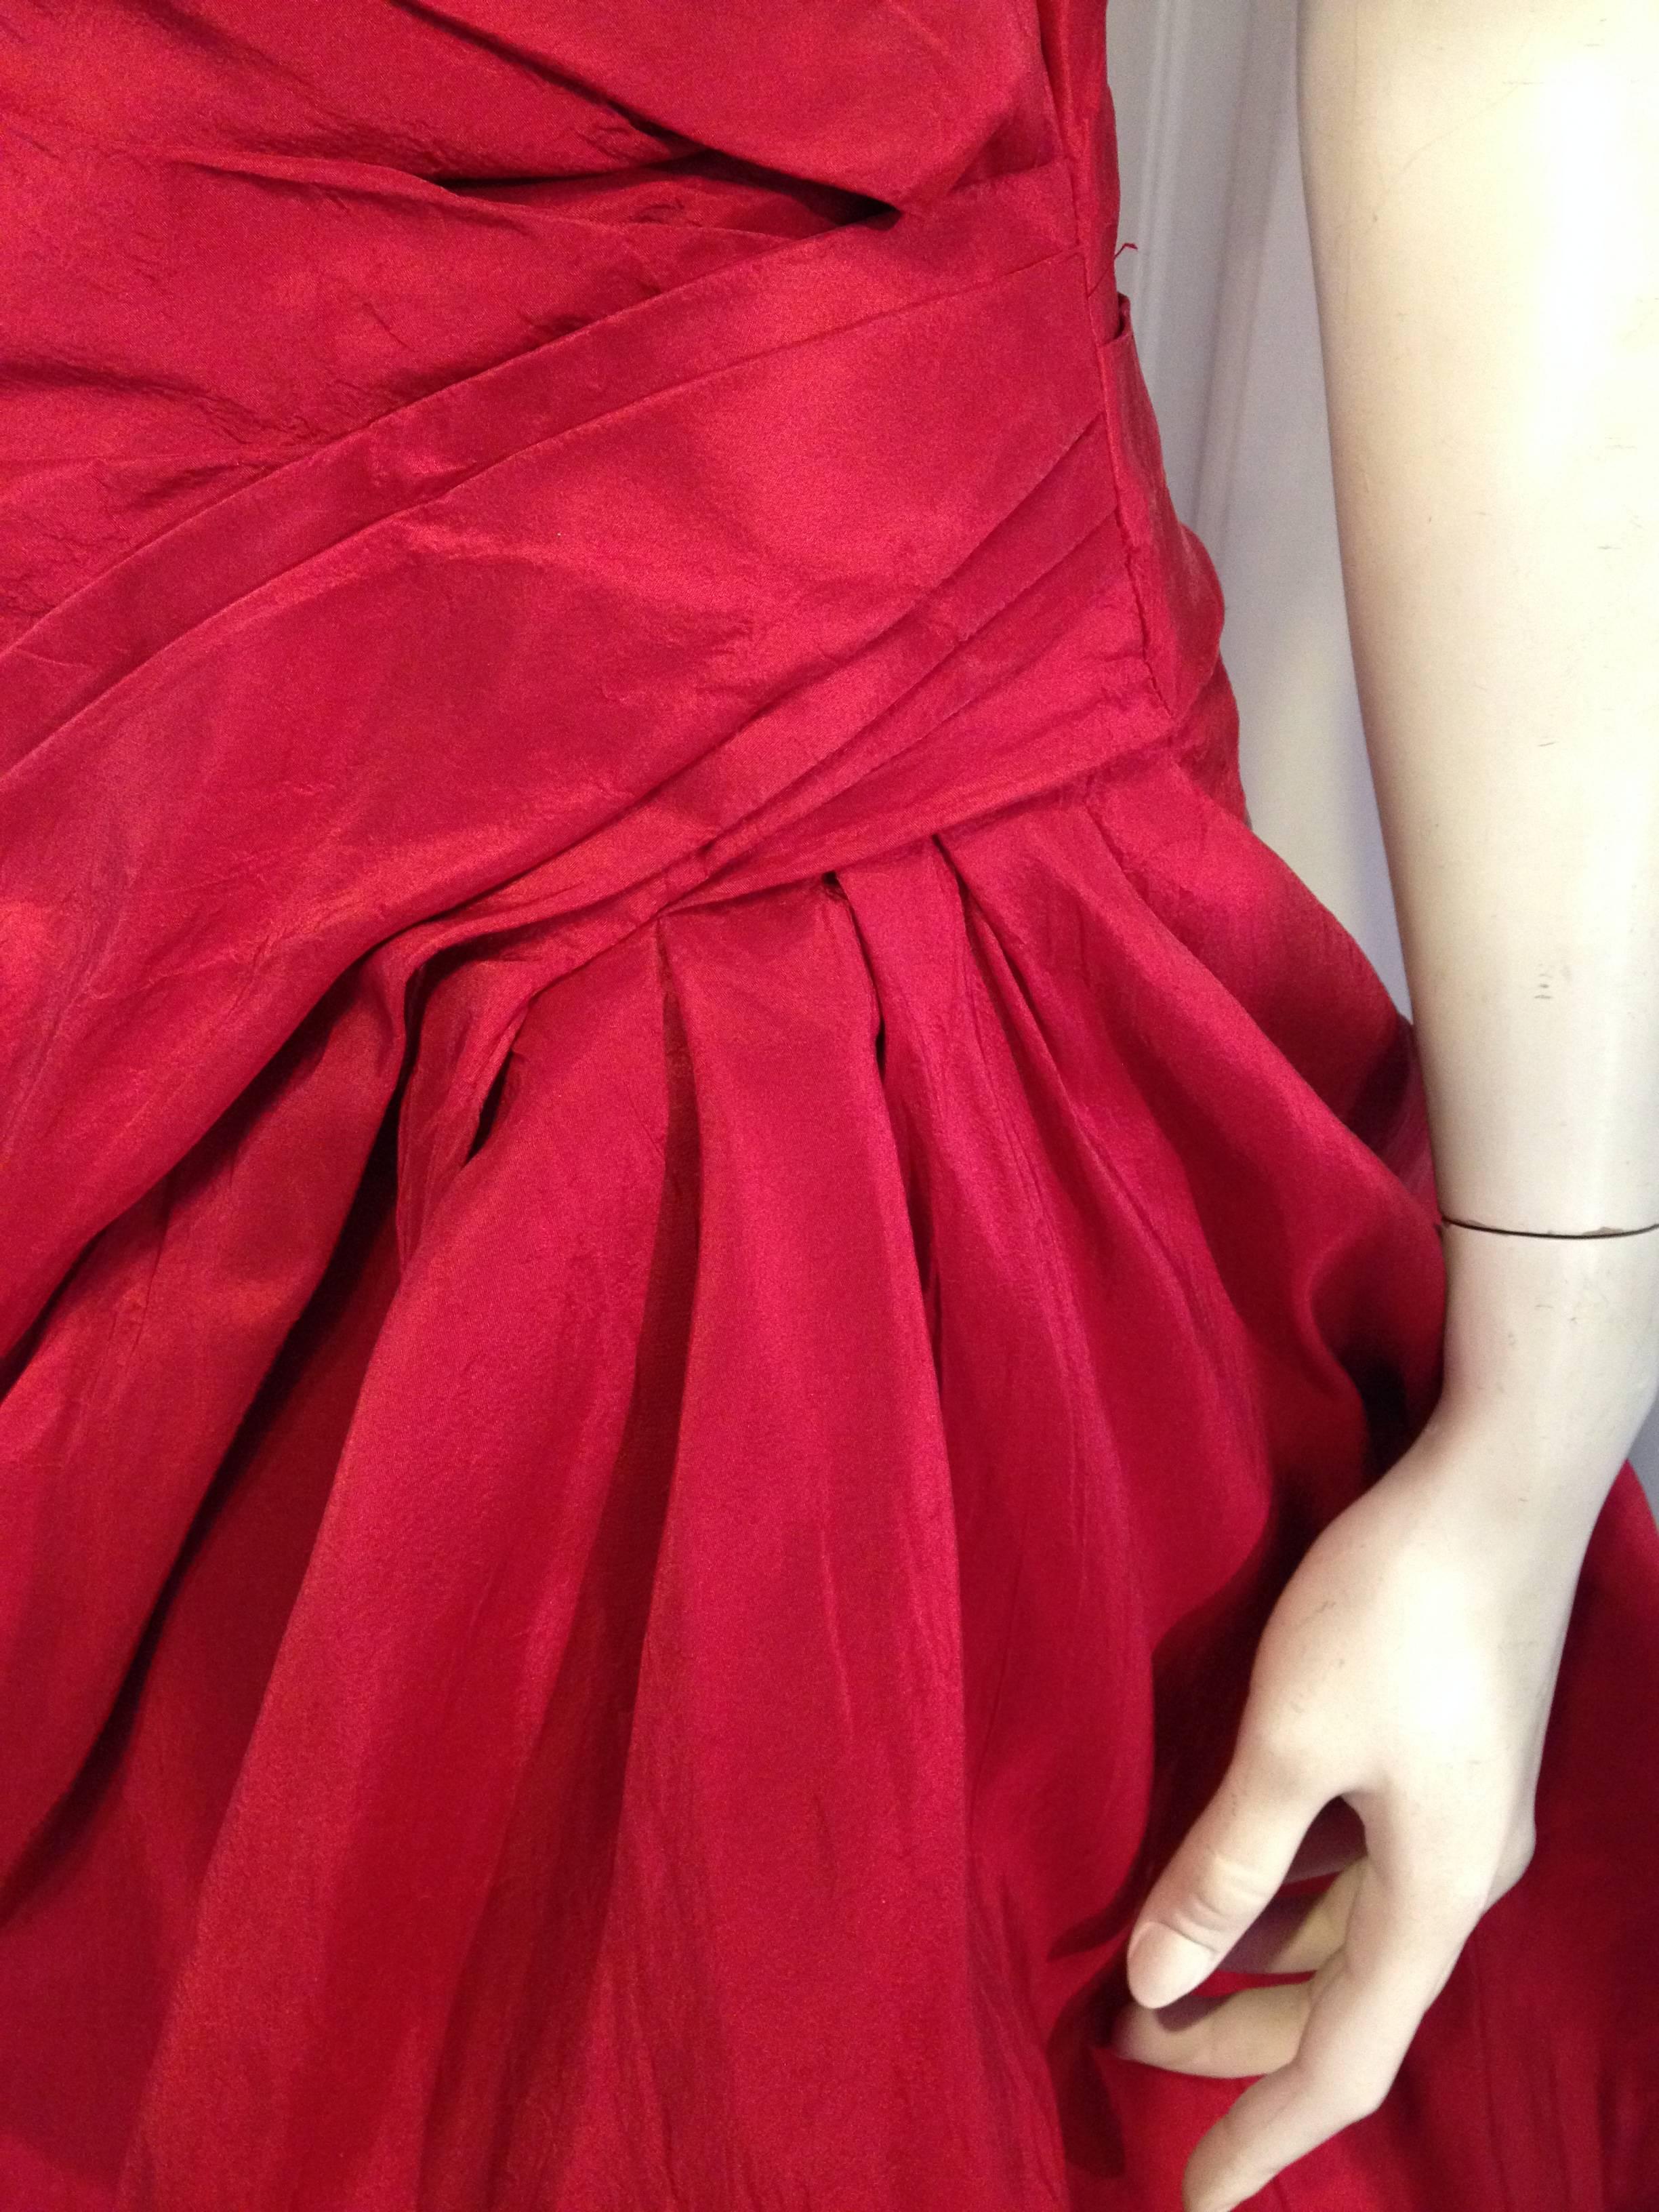 Monique Lhullier Red Silk Ball Gown 3